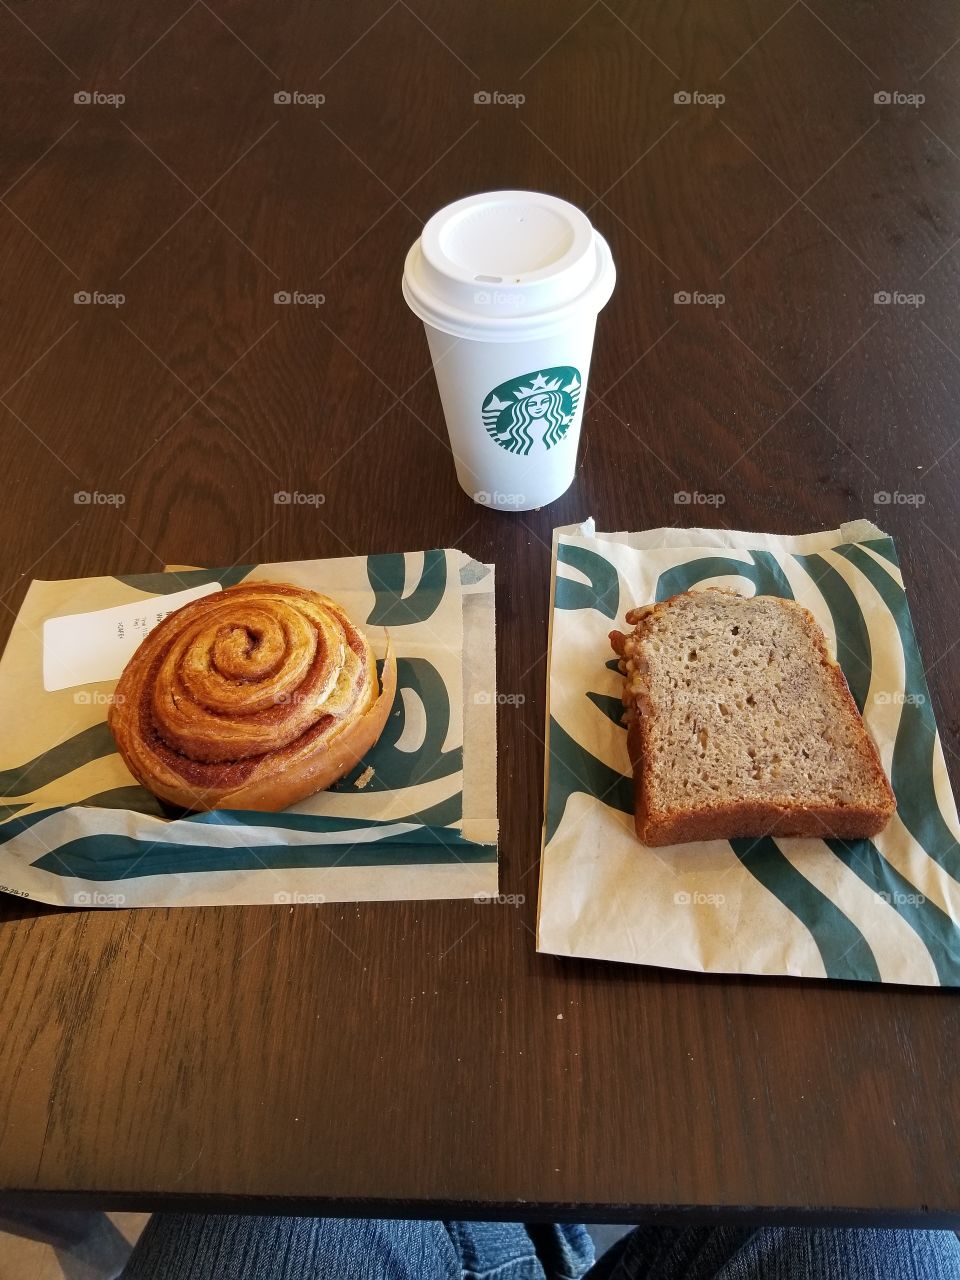 Starbucks breakfast